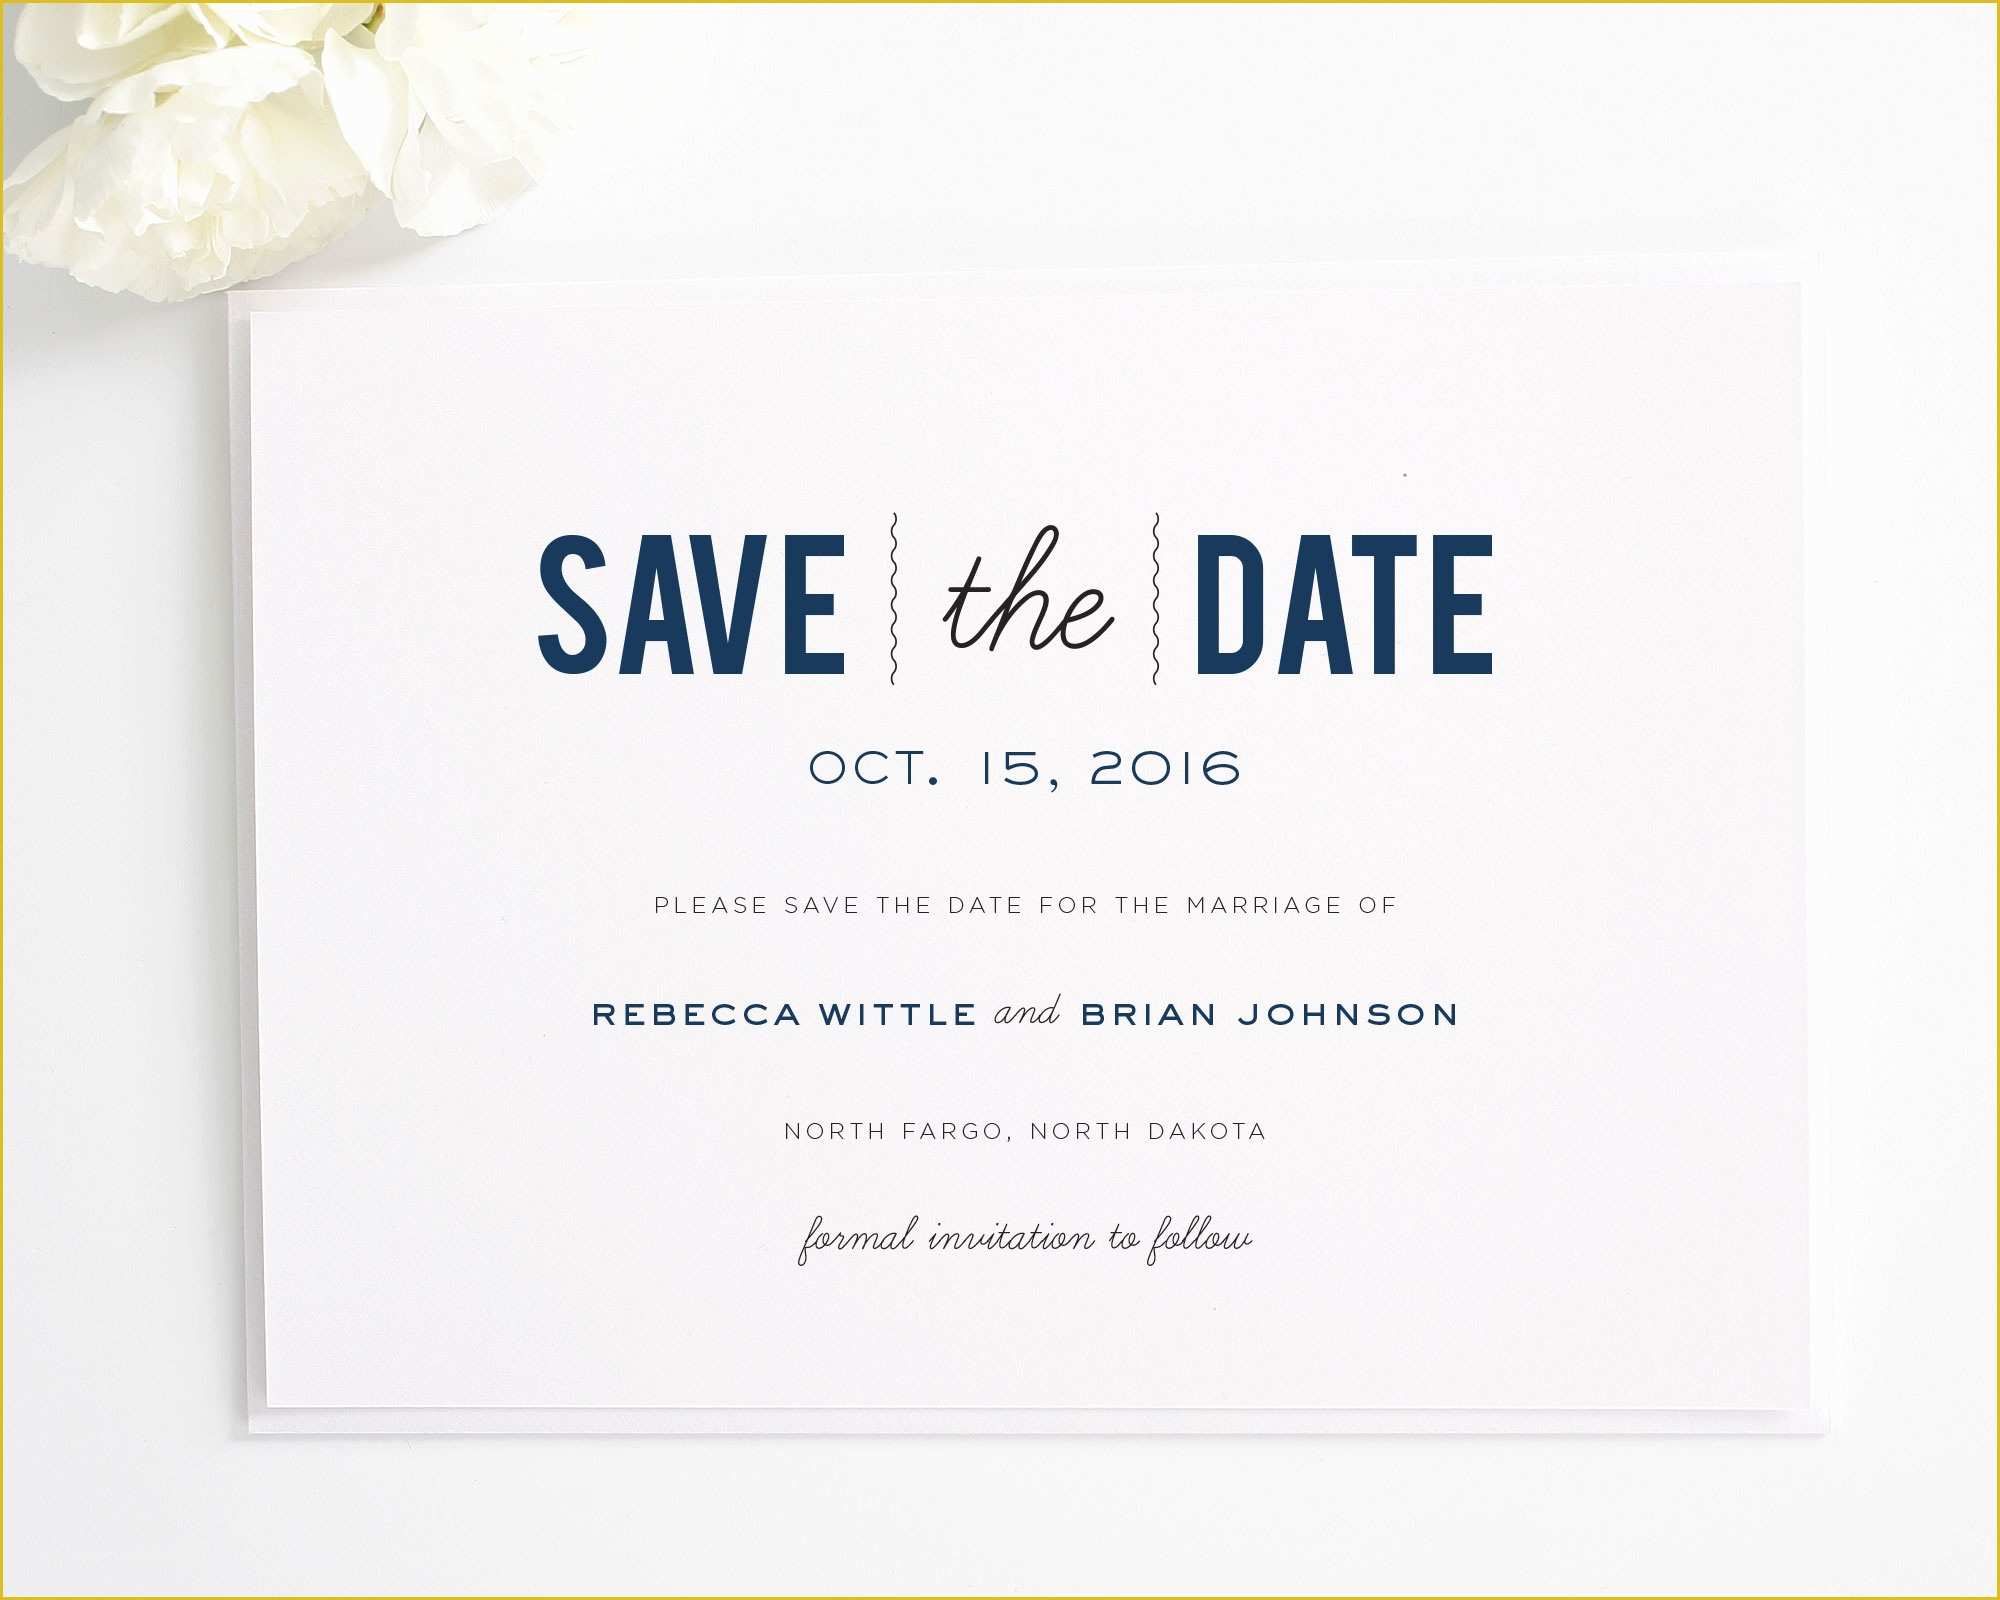 Free Save the Date Wedding Invitation Templates Of Save the Date Wedding Invitations Save the Date Wedding